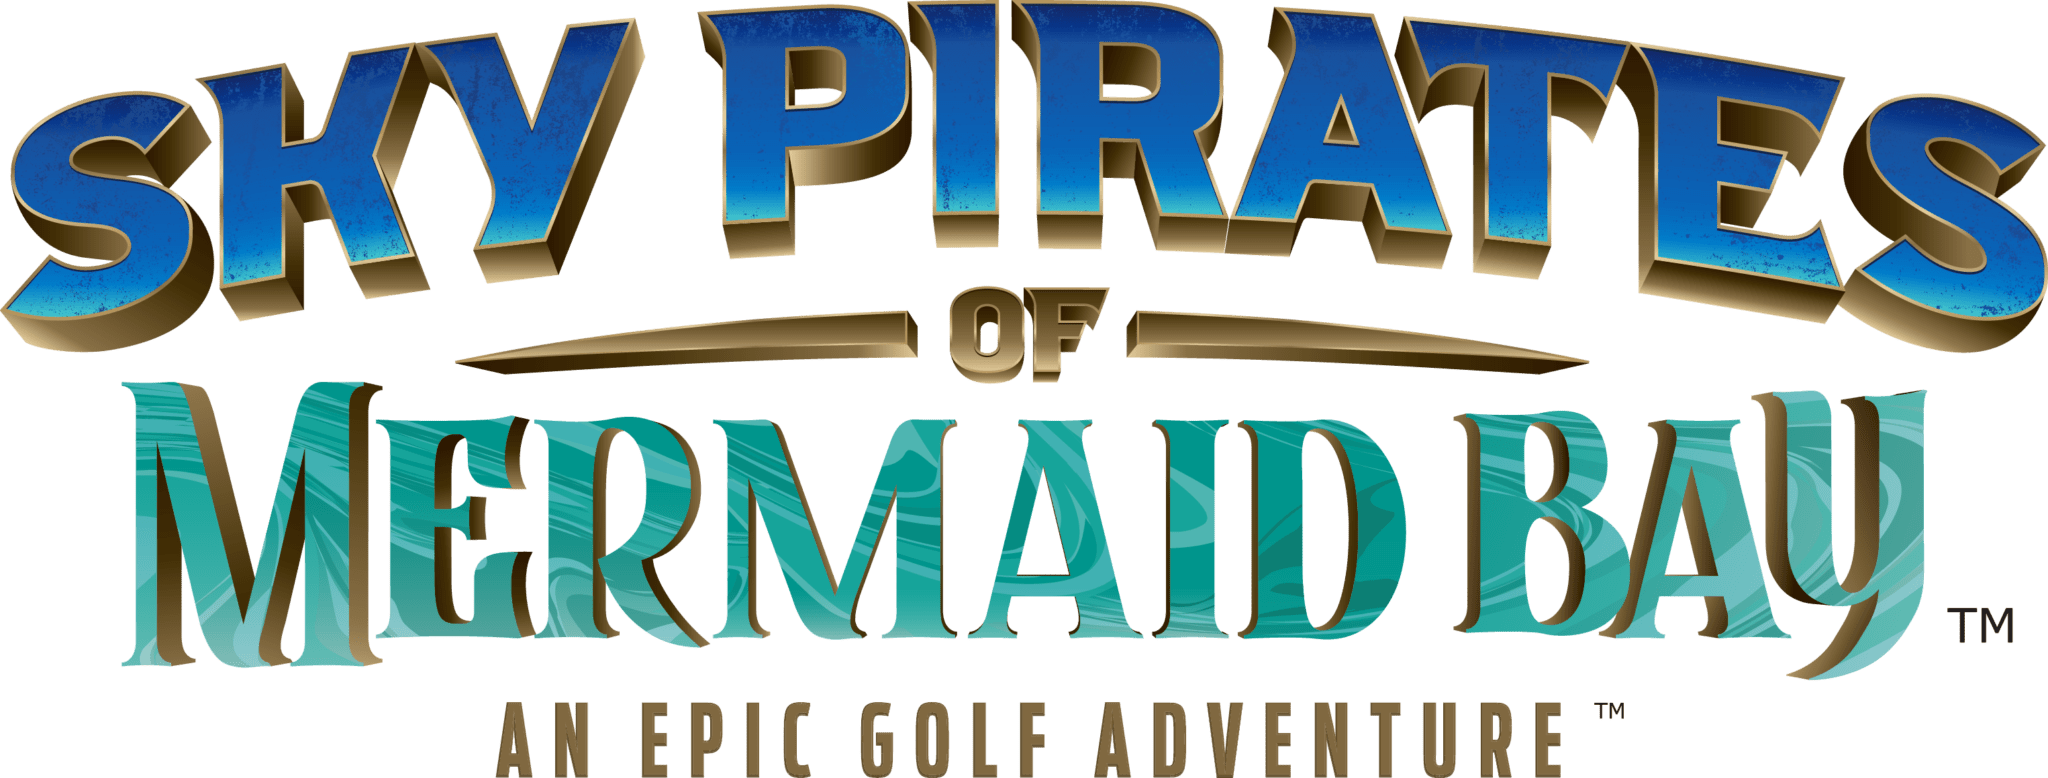 >Activities » Sky Pirates of Mermaid Bay Mini Golf | Pigeon Forge, TN Logo